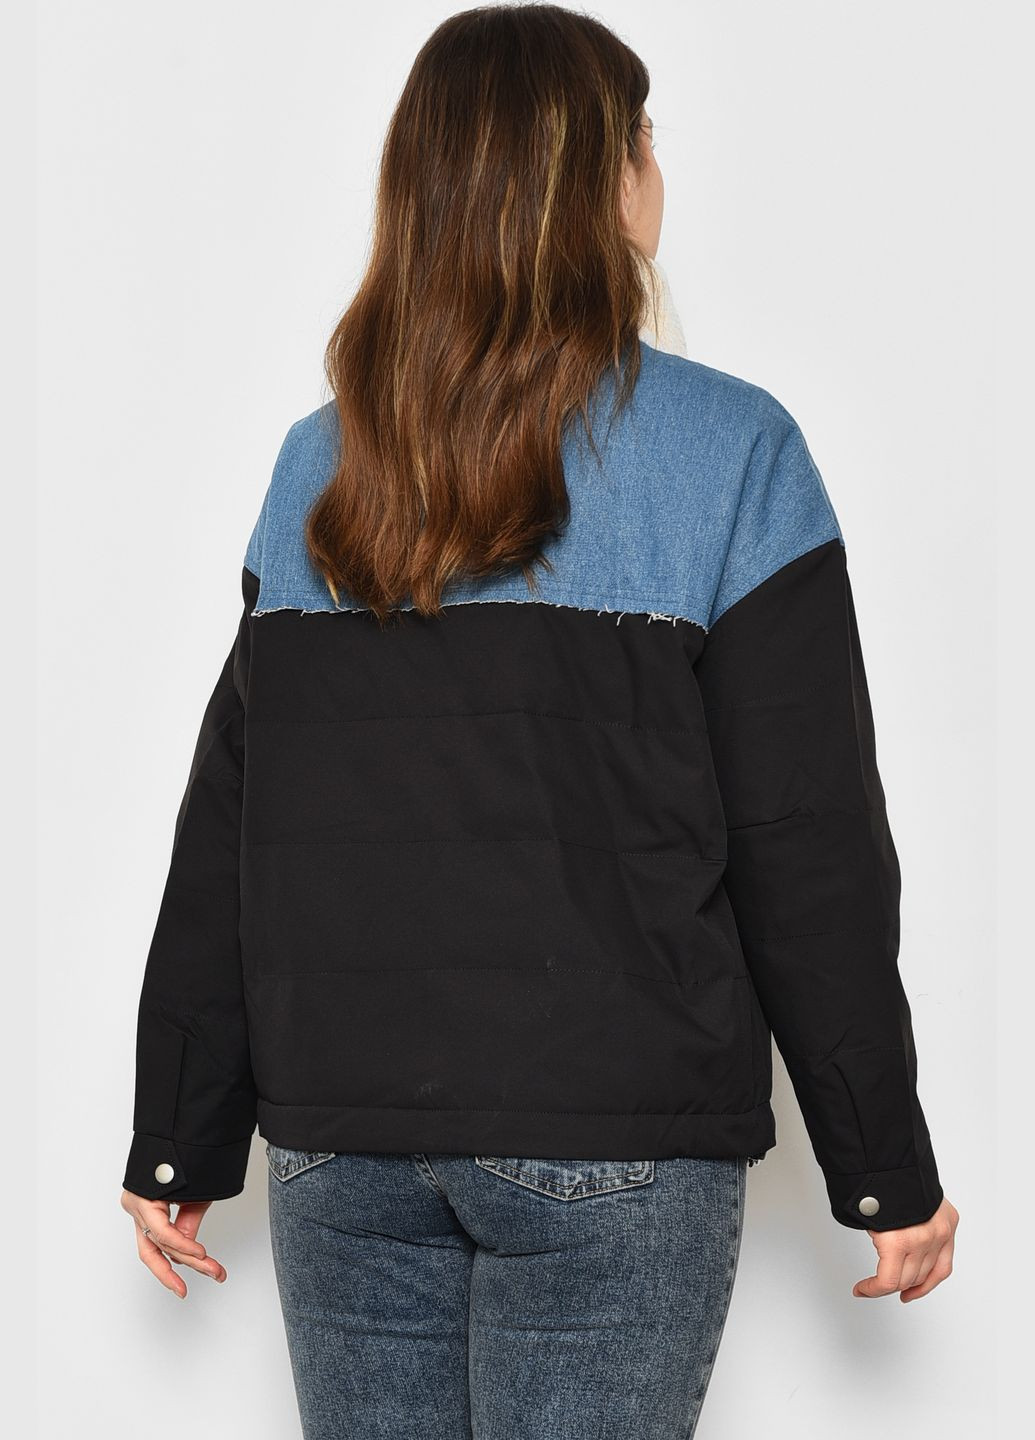 Чорна демісезонна куртка жіноча демісезонна чорно-блакитного кольору Let's Shop